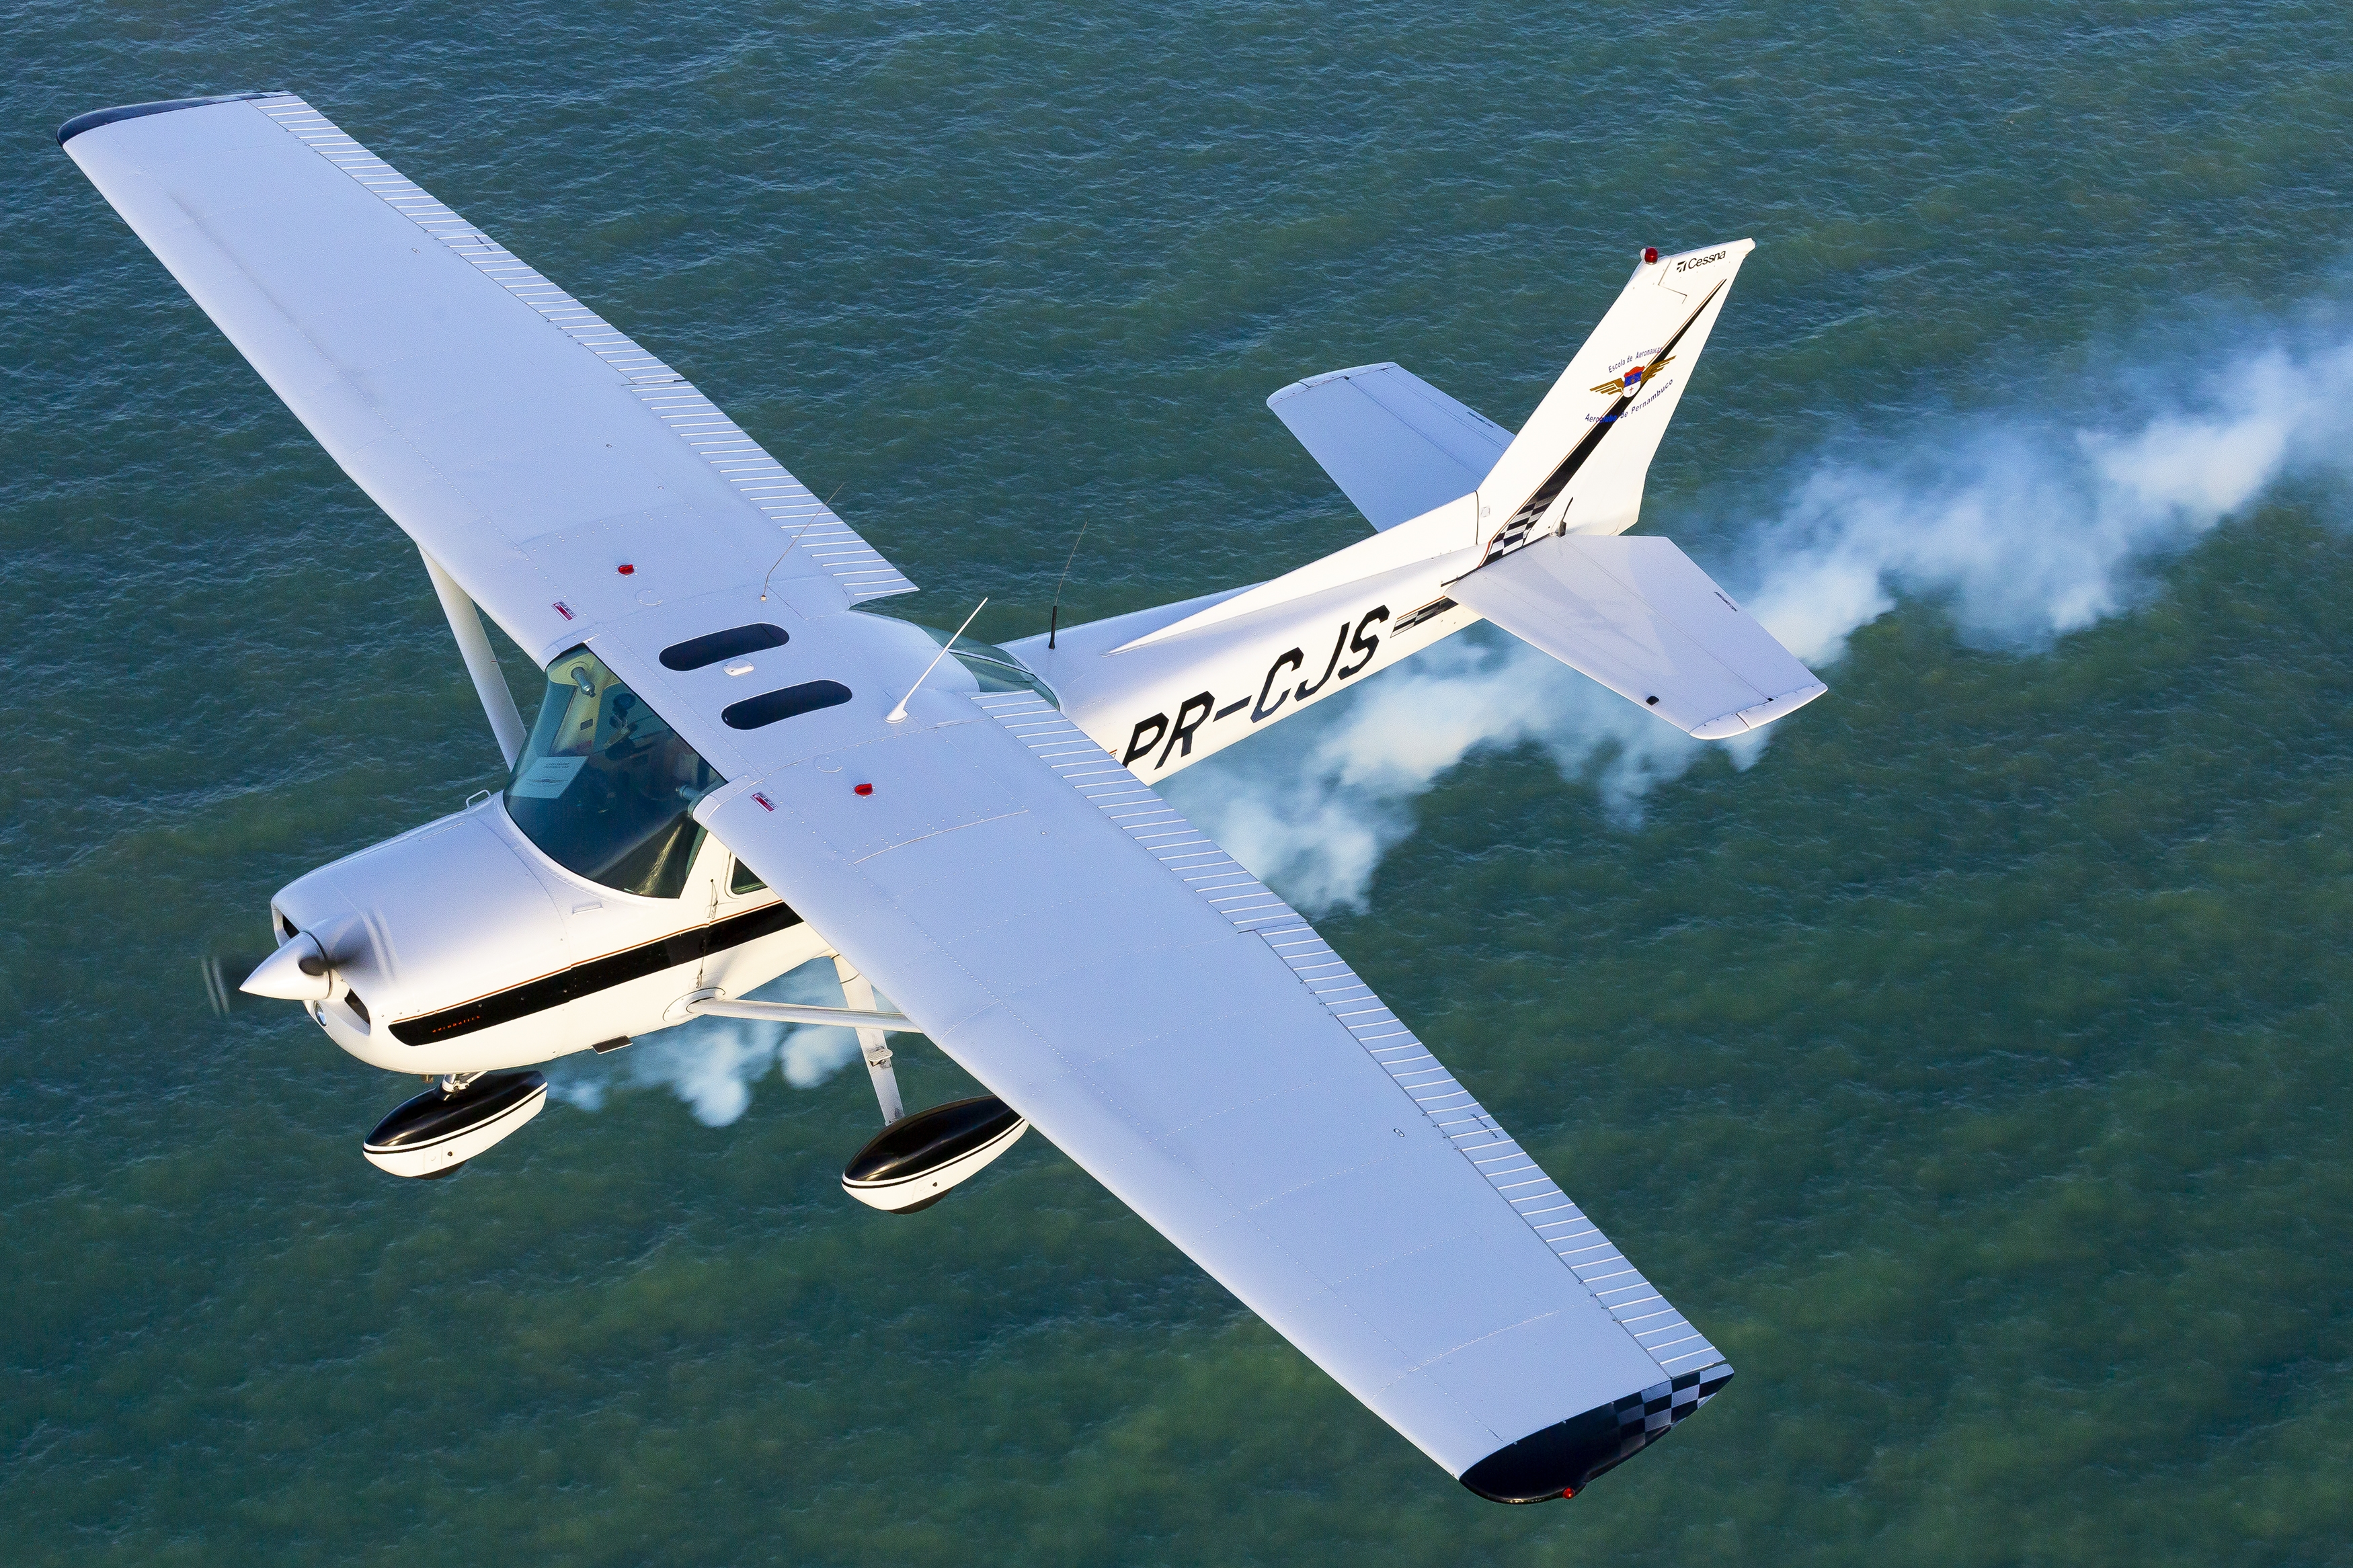 PR-CJS - Cessna 150 Aerobat